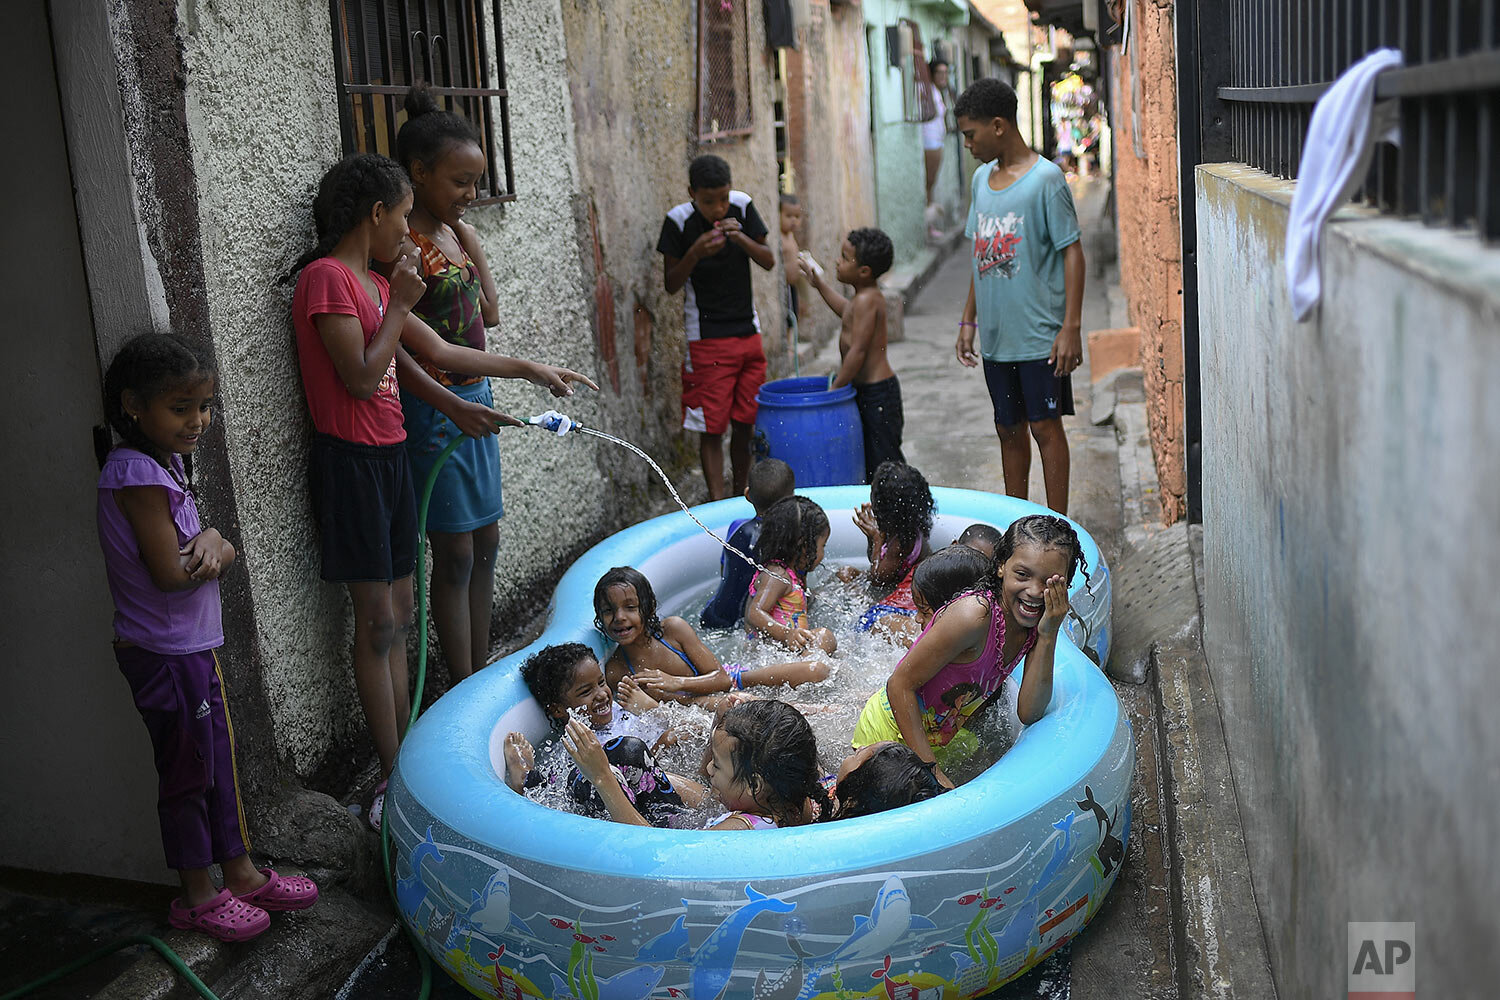  Children play in an inflatable pool during carnival in the Pinto Salinas neighborhood of Caracas, Venezuela, Feb. 15, 2021. (AP Photo/Matias Delacroix) 